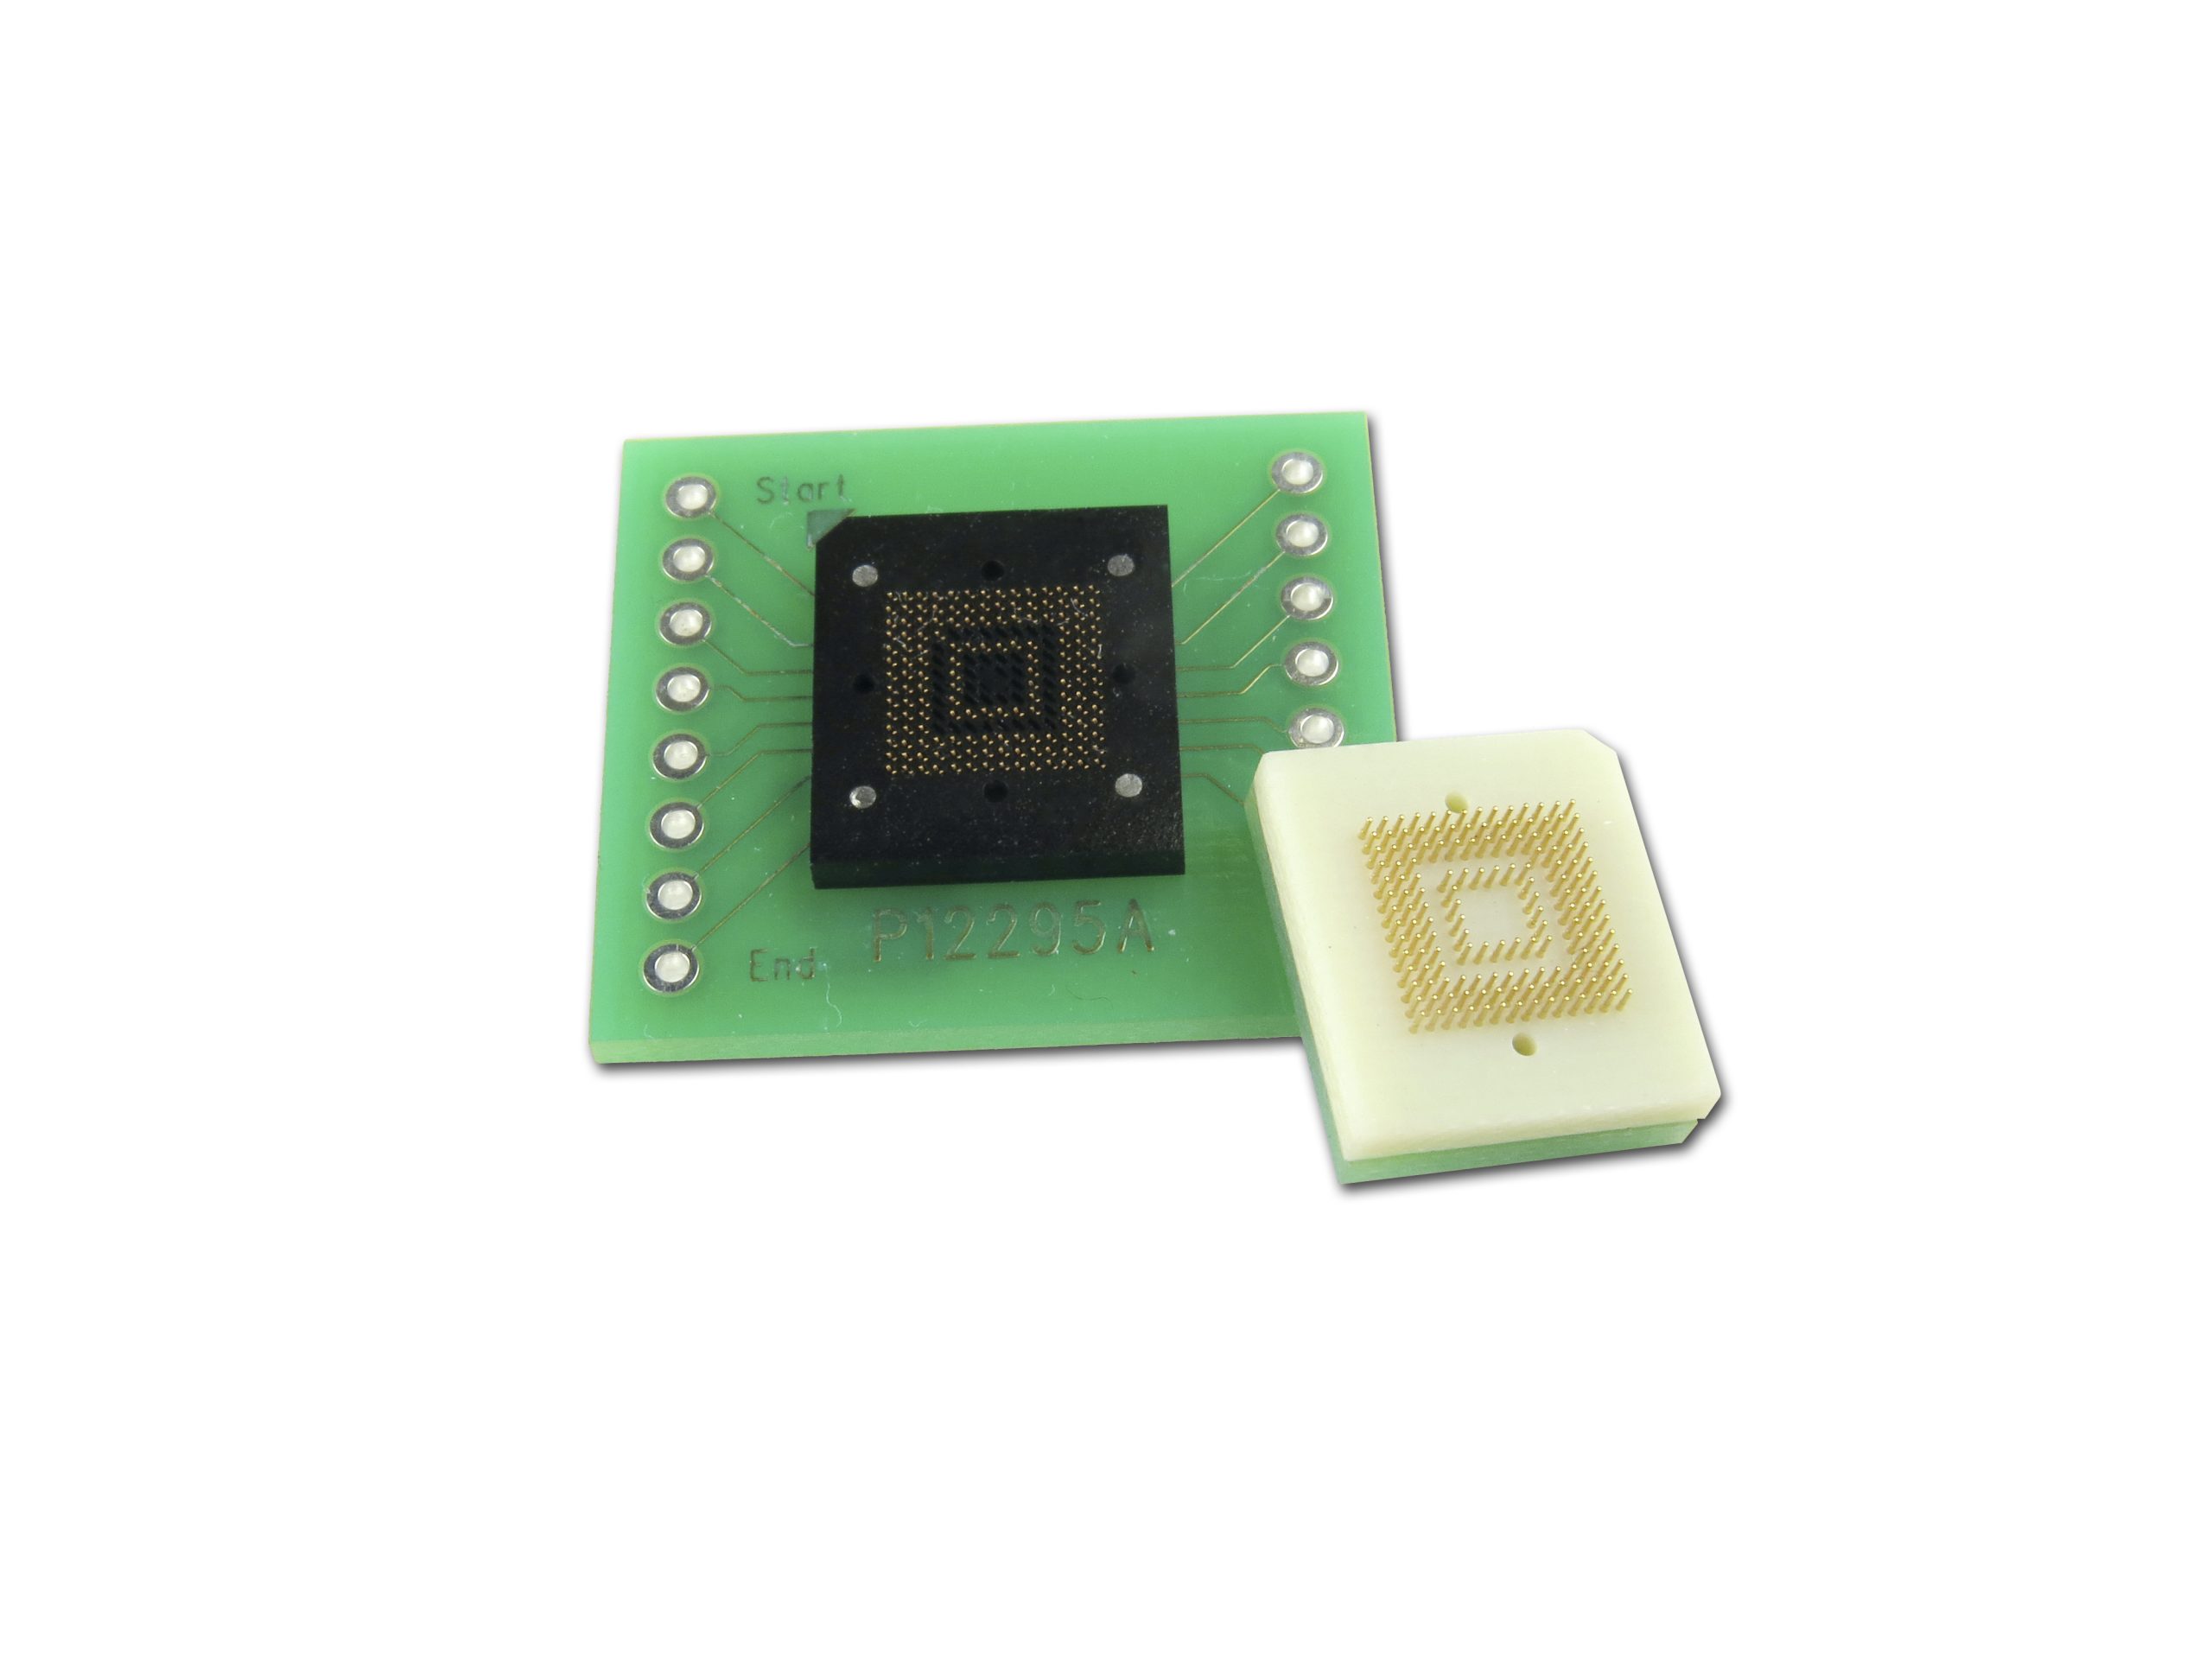 Chip Size 0.5mm Pitch BGA Socket Adapter for Toshiba’s e-MMC